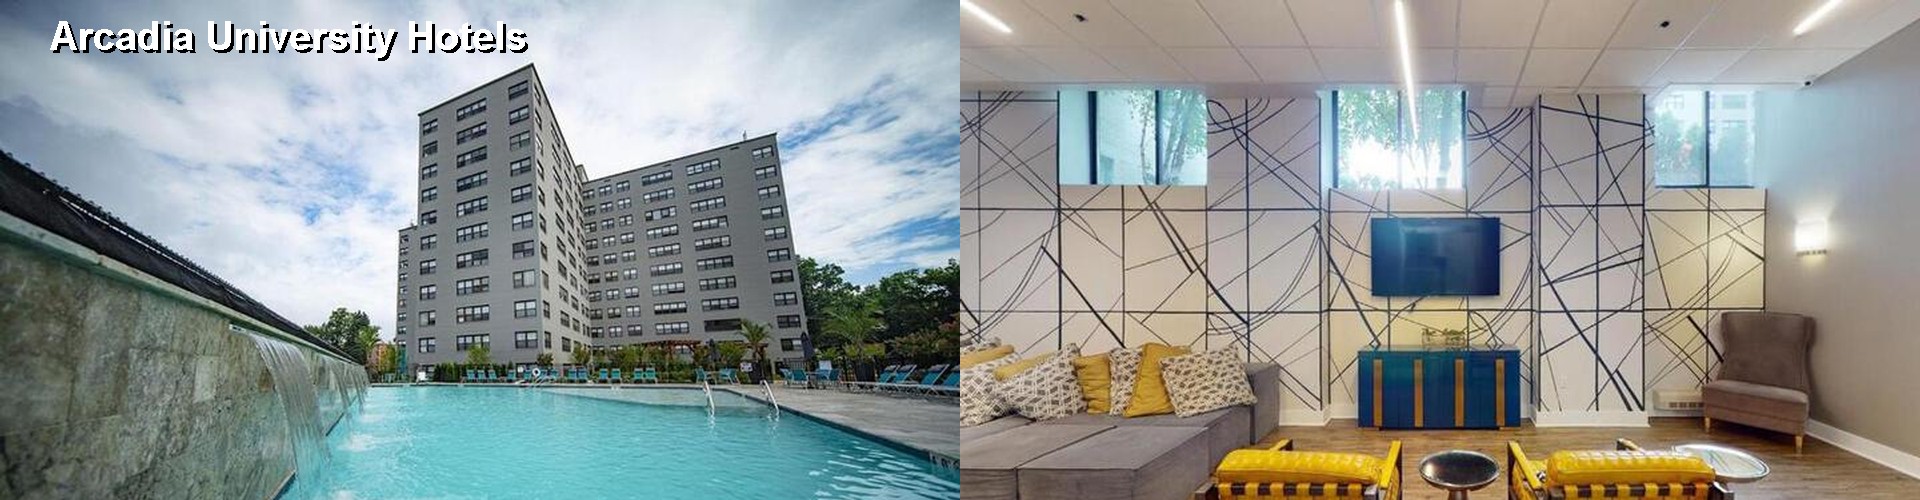 5 Best Hotels near Arcadia University